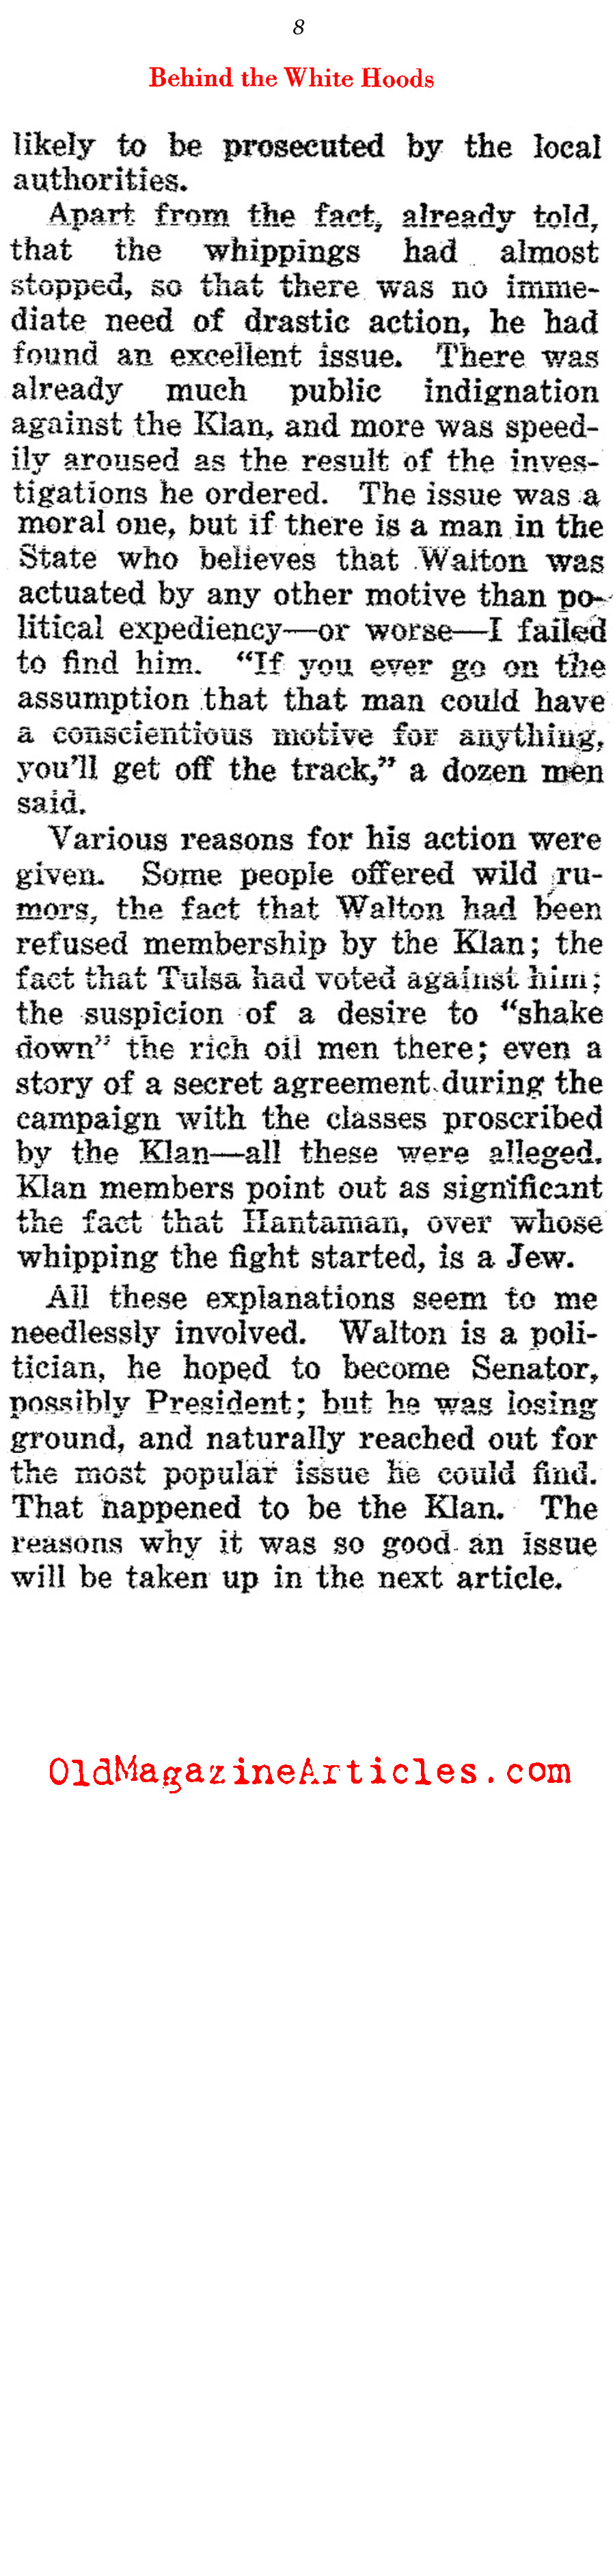 The KKK in Oklahoma  (The Outlook, 1922)